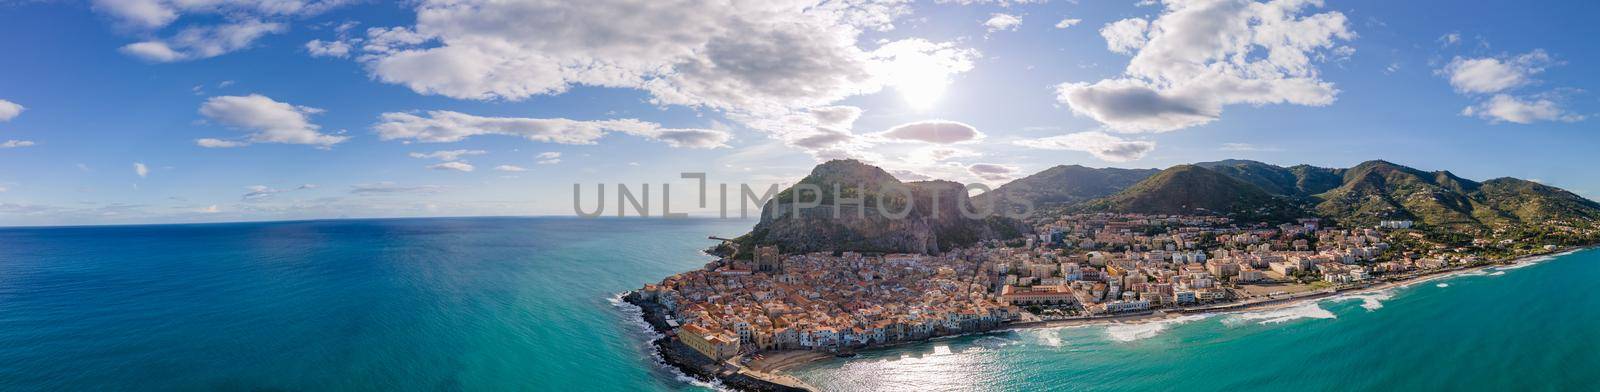 Cefalu, the medieval village of Sicily island, Province of Palermo, Italy Sicilia